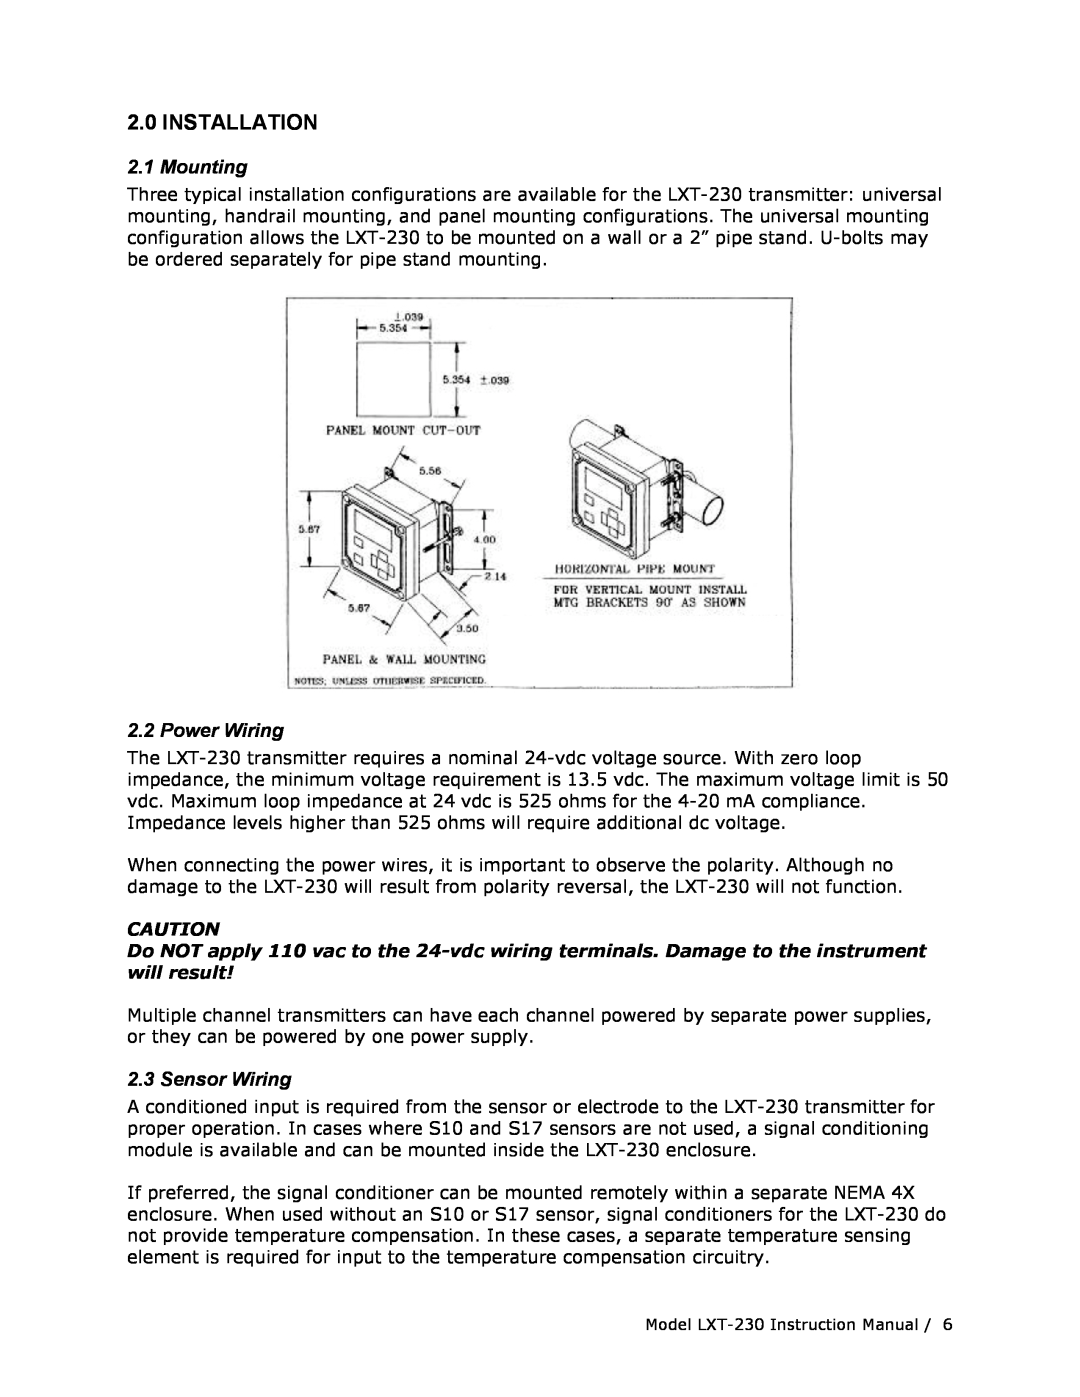 Teledyne LXT-230 manual 2.0INSTALLATION, 2.1Mounting, Power Wiring, Sensor Wiring 